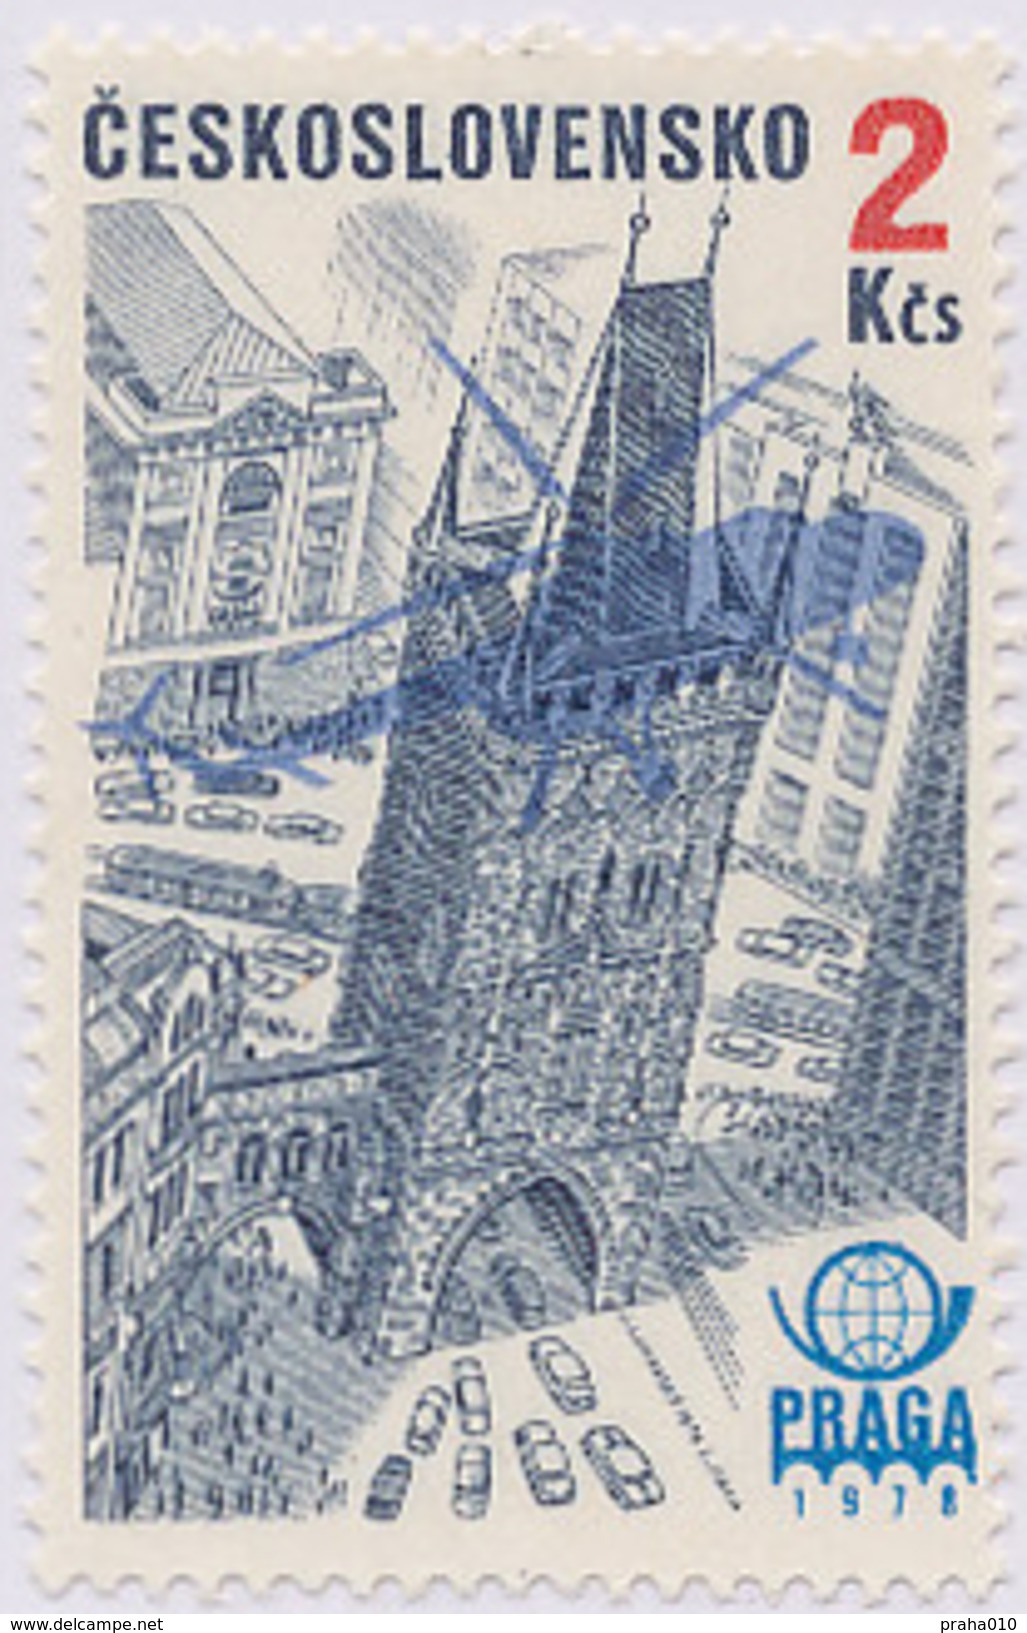 Czechoslovakia / Stamps (1976) L0082 (Air Mail Stamp): PRAGA 78 (Prague, Powder Tower); Painter: J. Lukavsky - Helicópteros